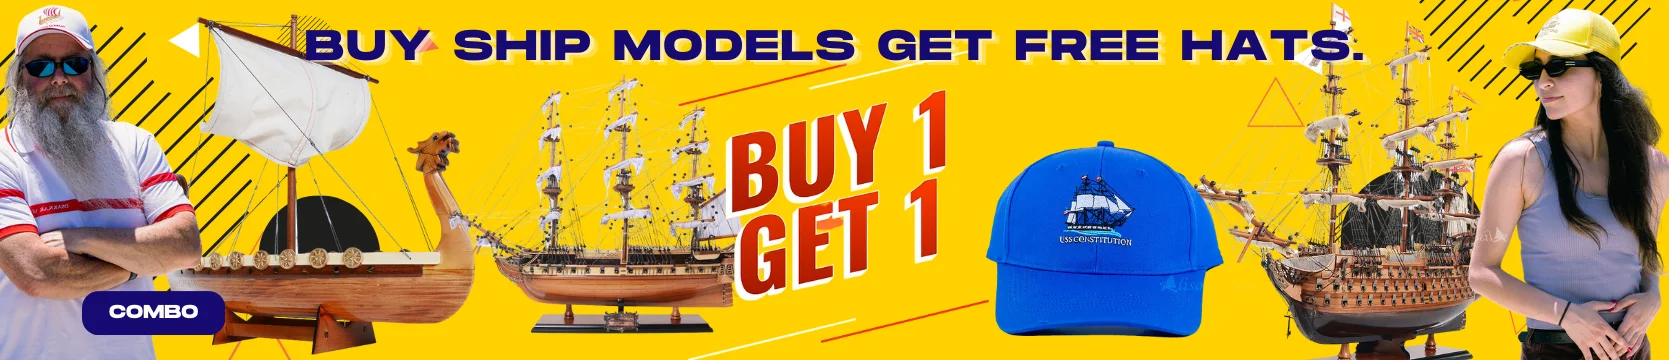 Buy ship models get free hats